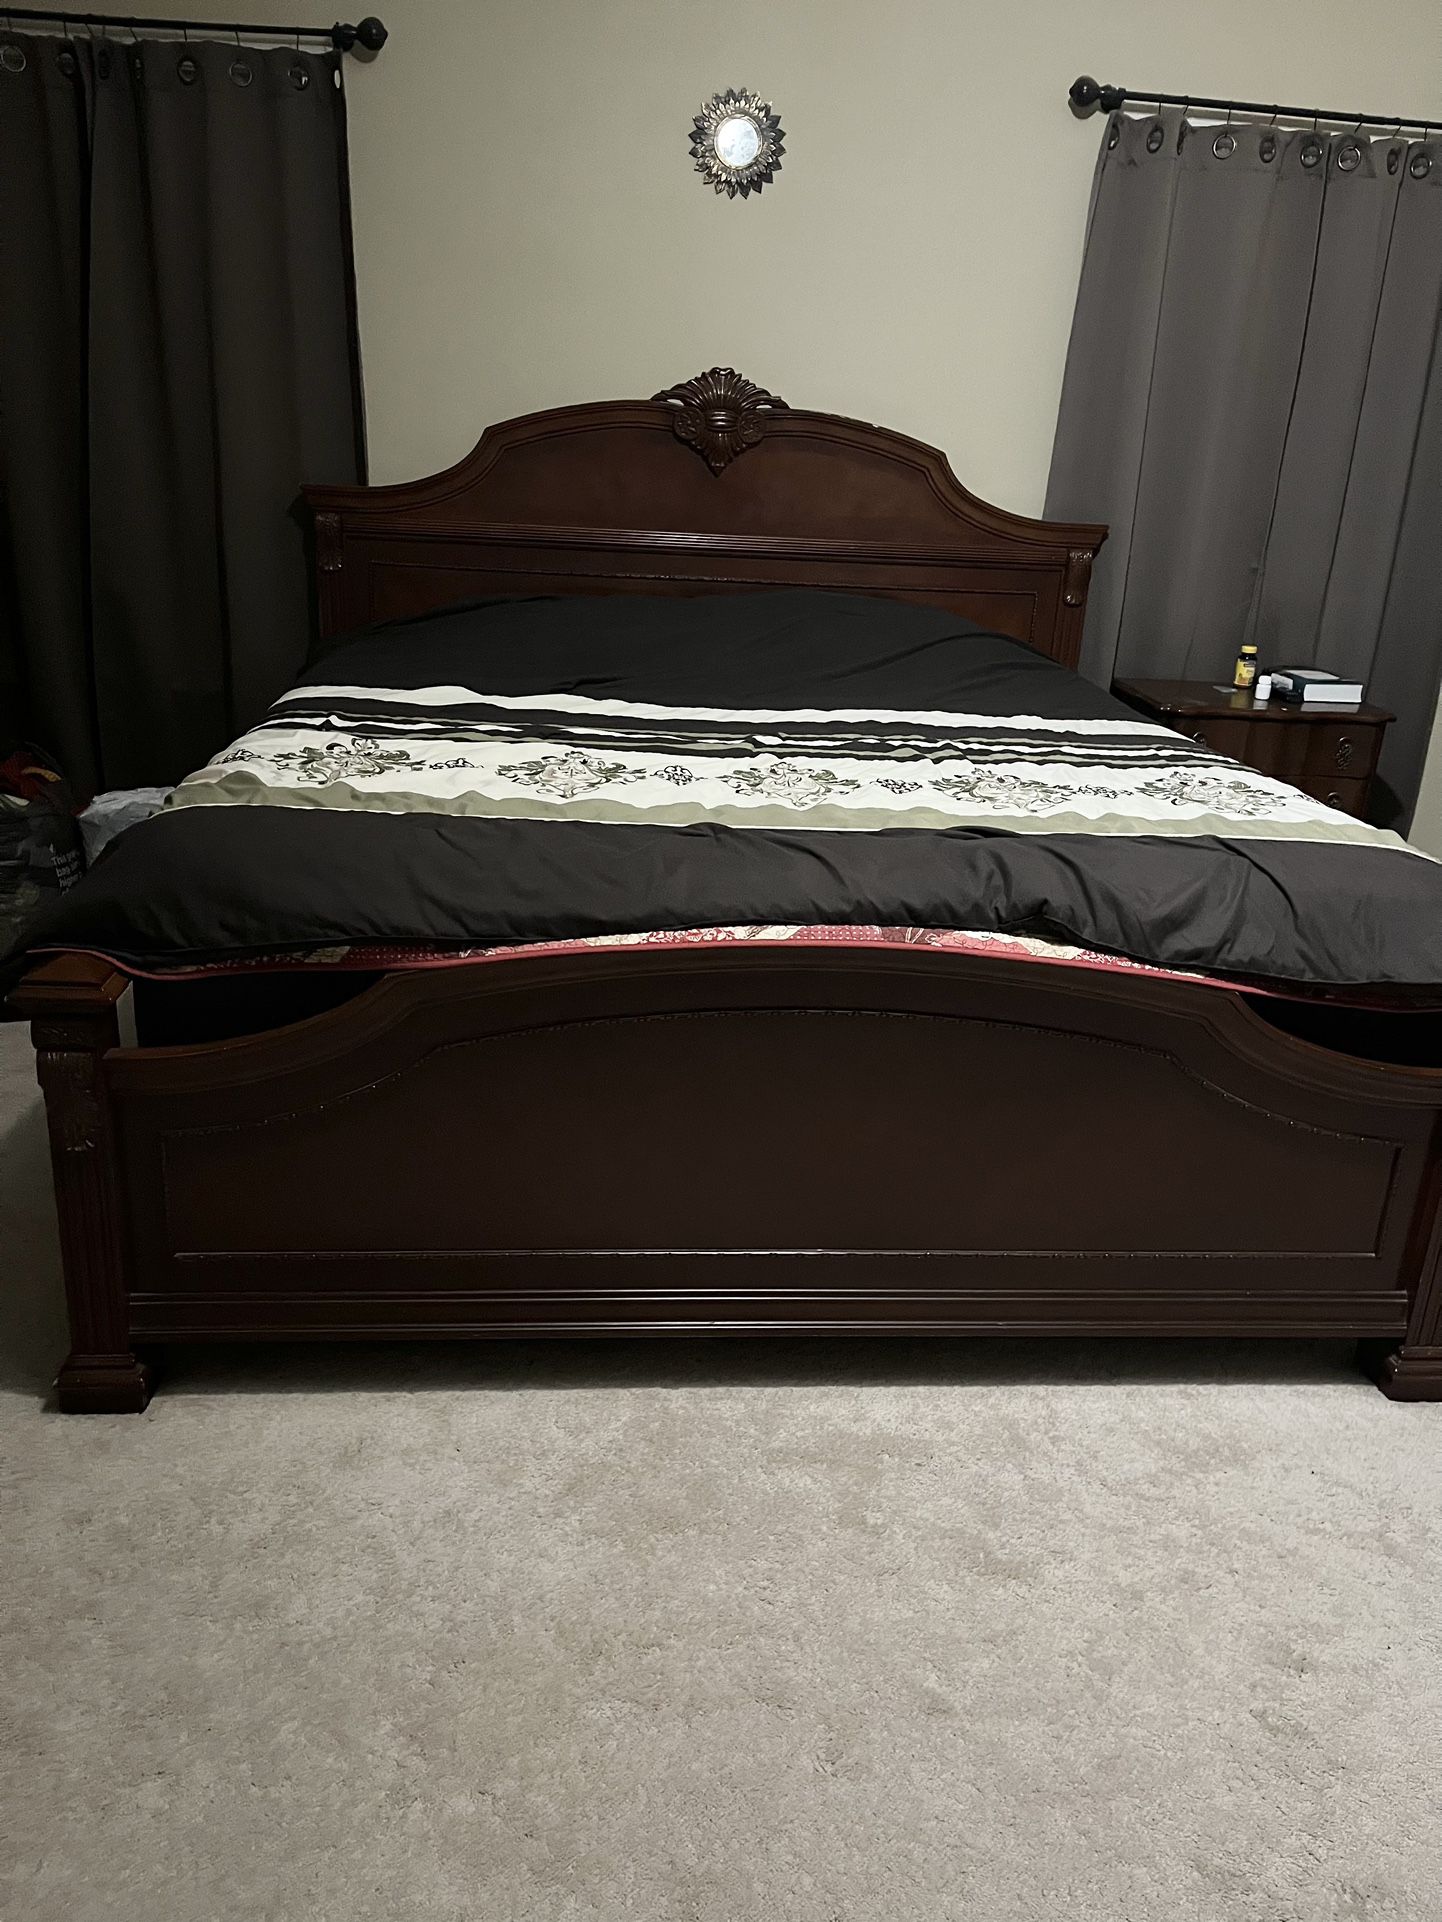 Cherry King bedframe, box springs and foam mattress